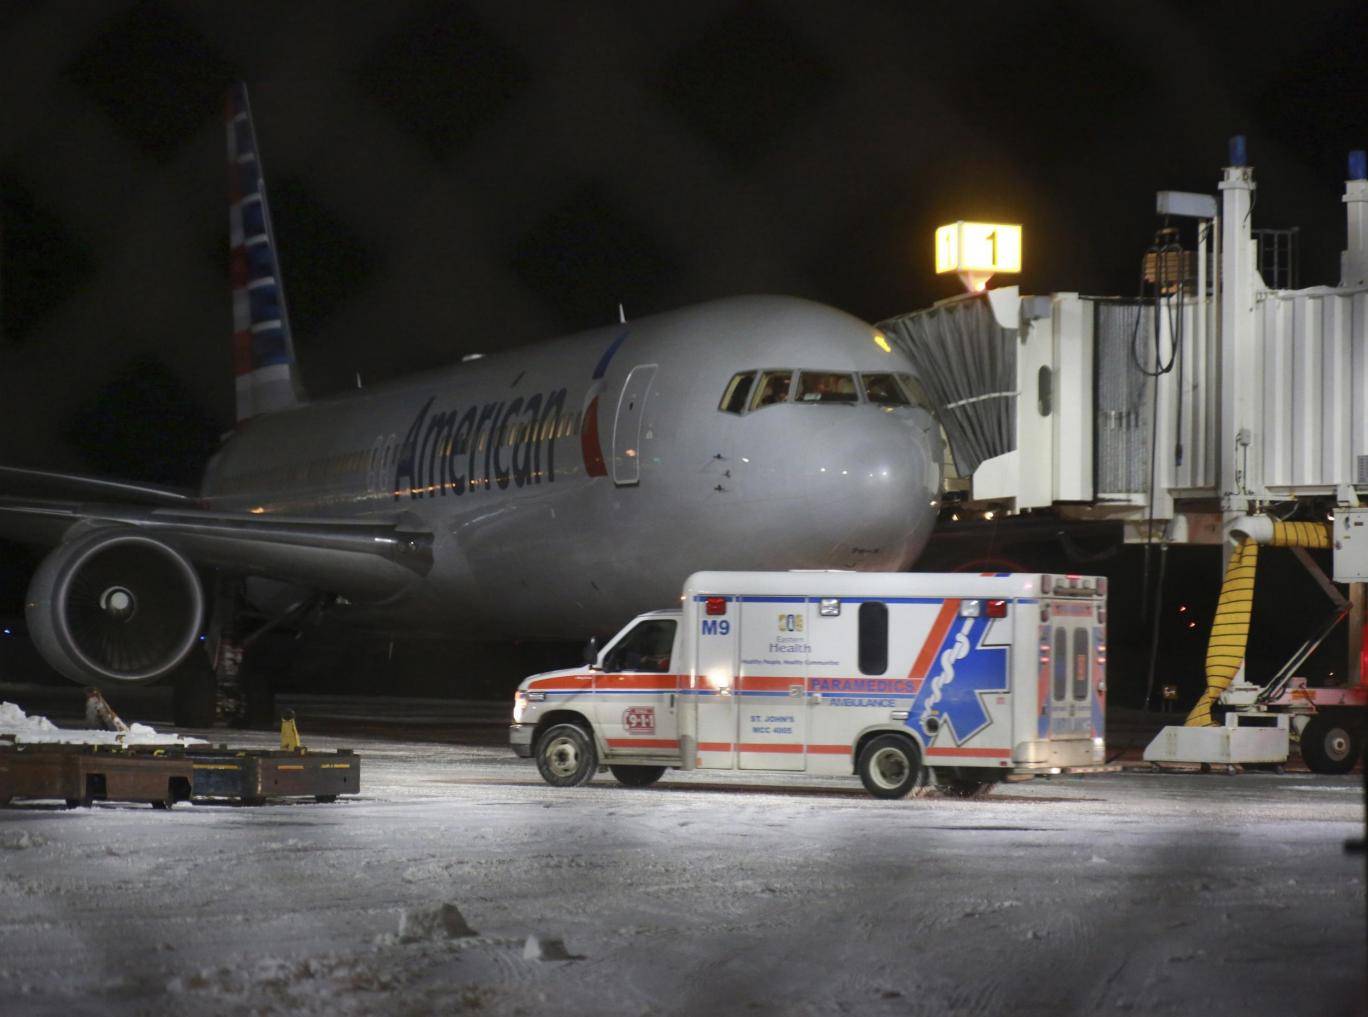 Etihad airways flight suffers a severe turbulence which left dozen injured